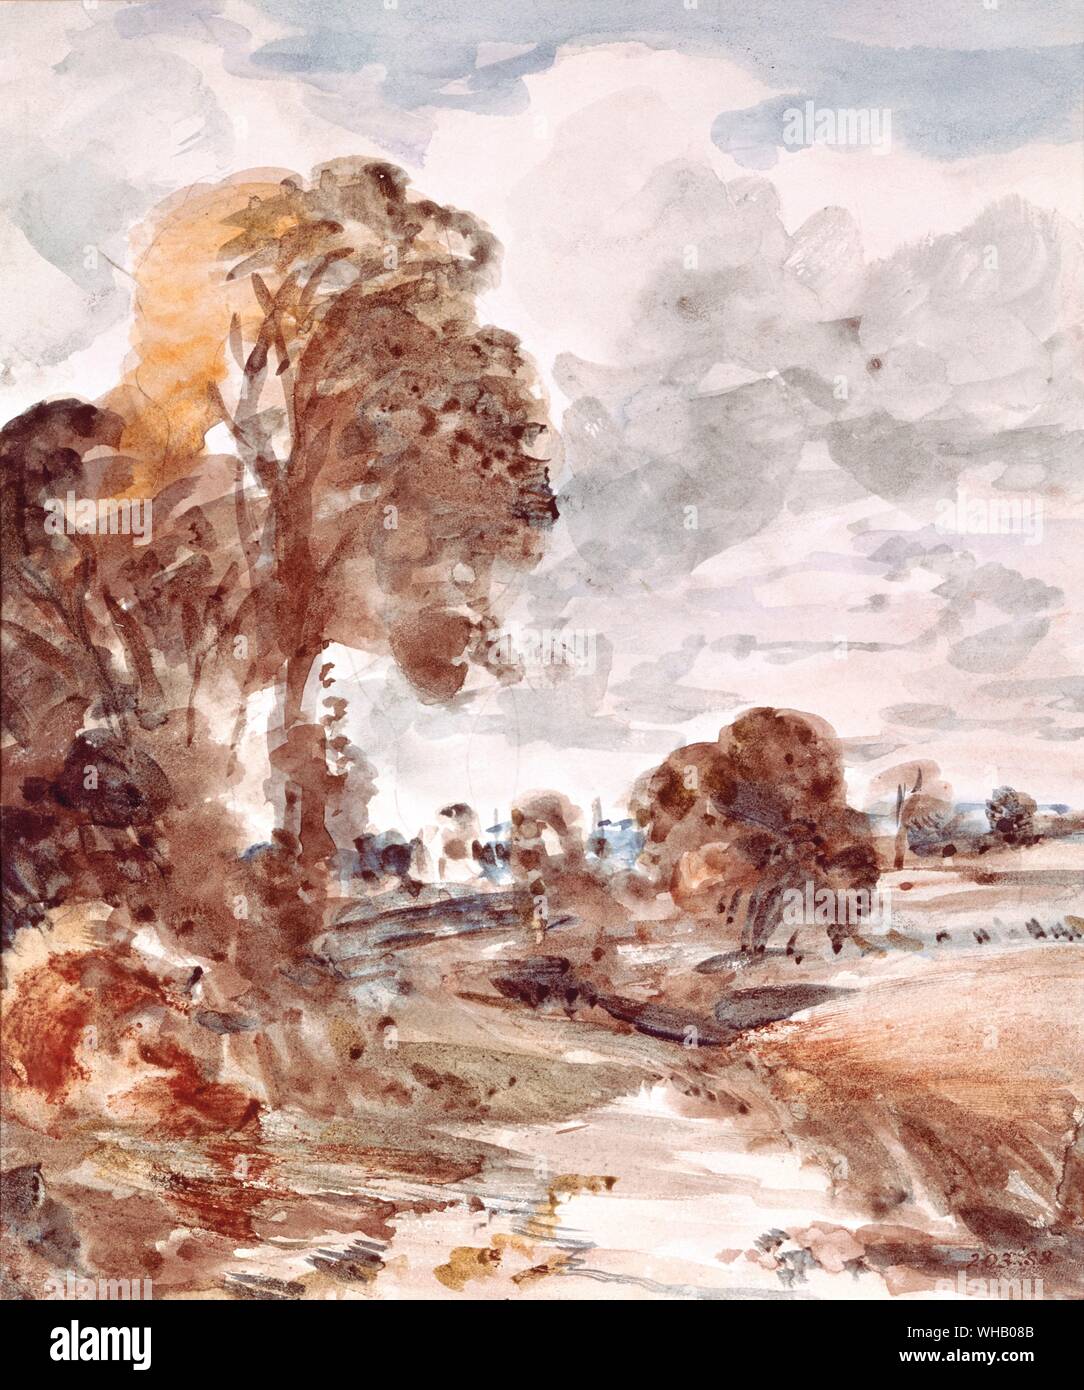 Landscape by Constable. in Victoria & Albert Museum, London. John Constable (June 11, 1776 - March 31, 1837) was a British Romantic artist, born in Suffolk.. Stock Photo